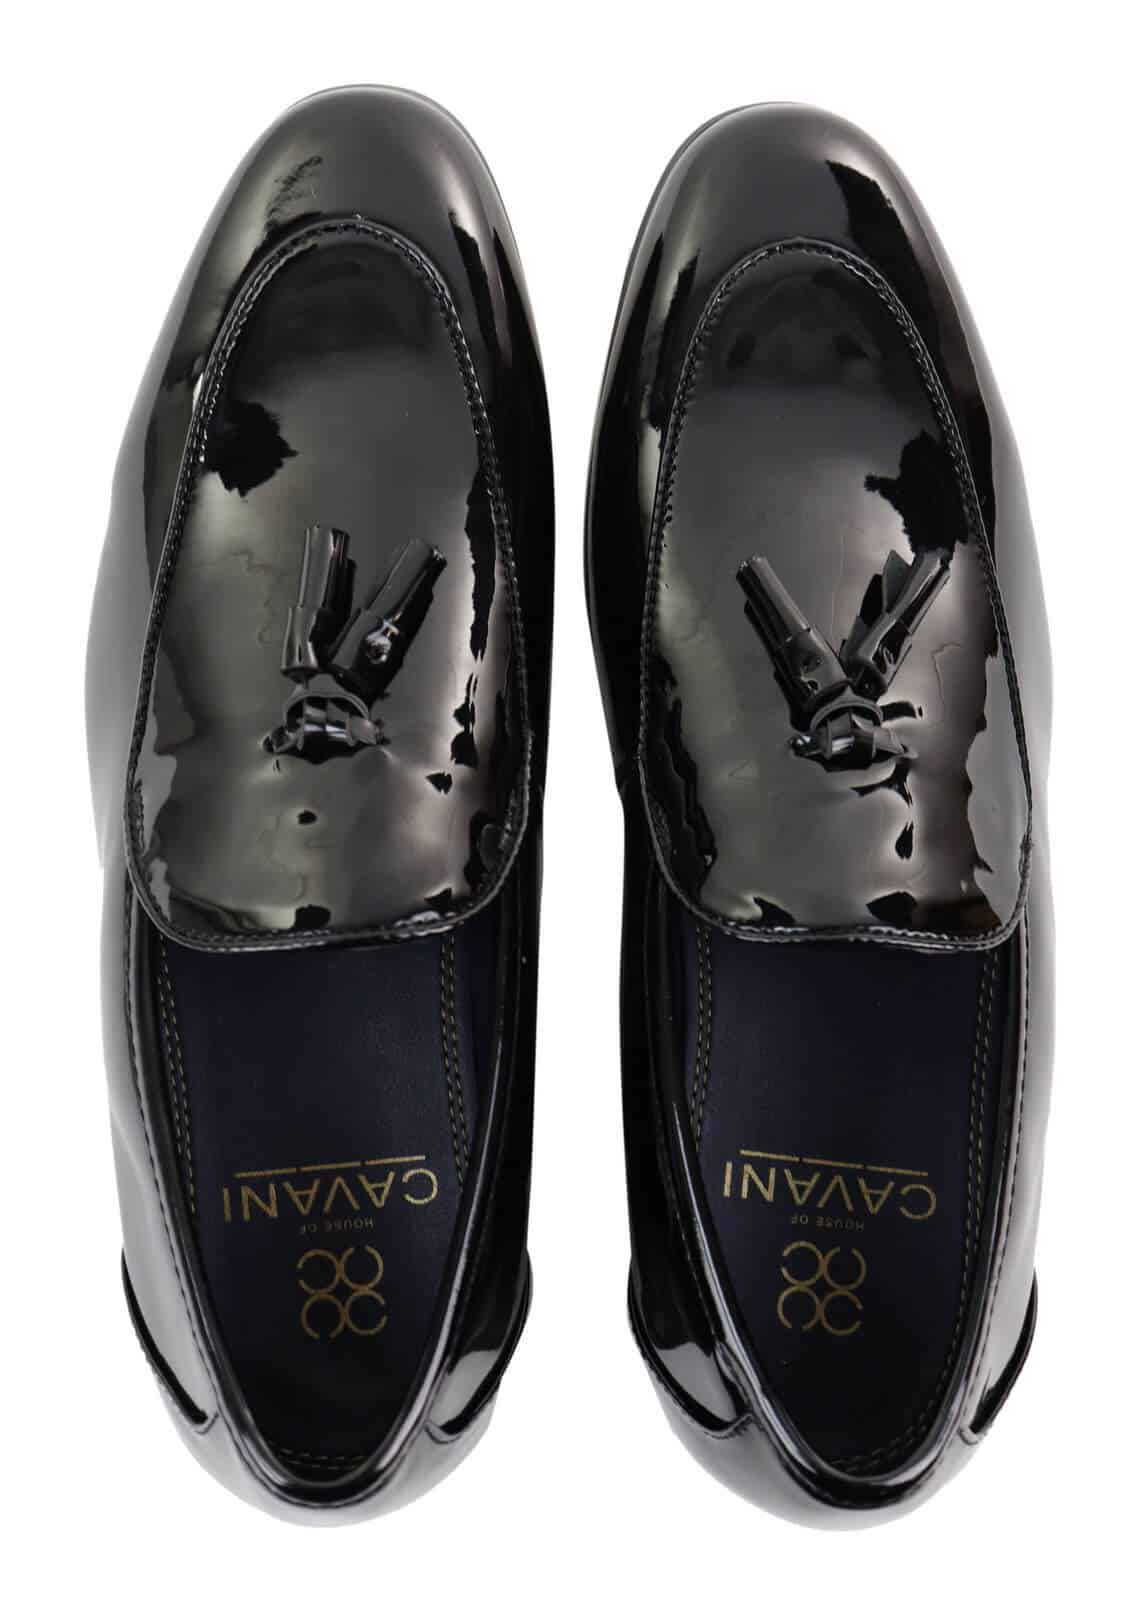 Mens Black Patent Shoes with Tassel: Buy Online - Happy Gentleman